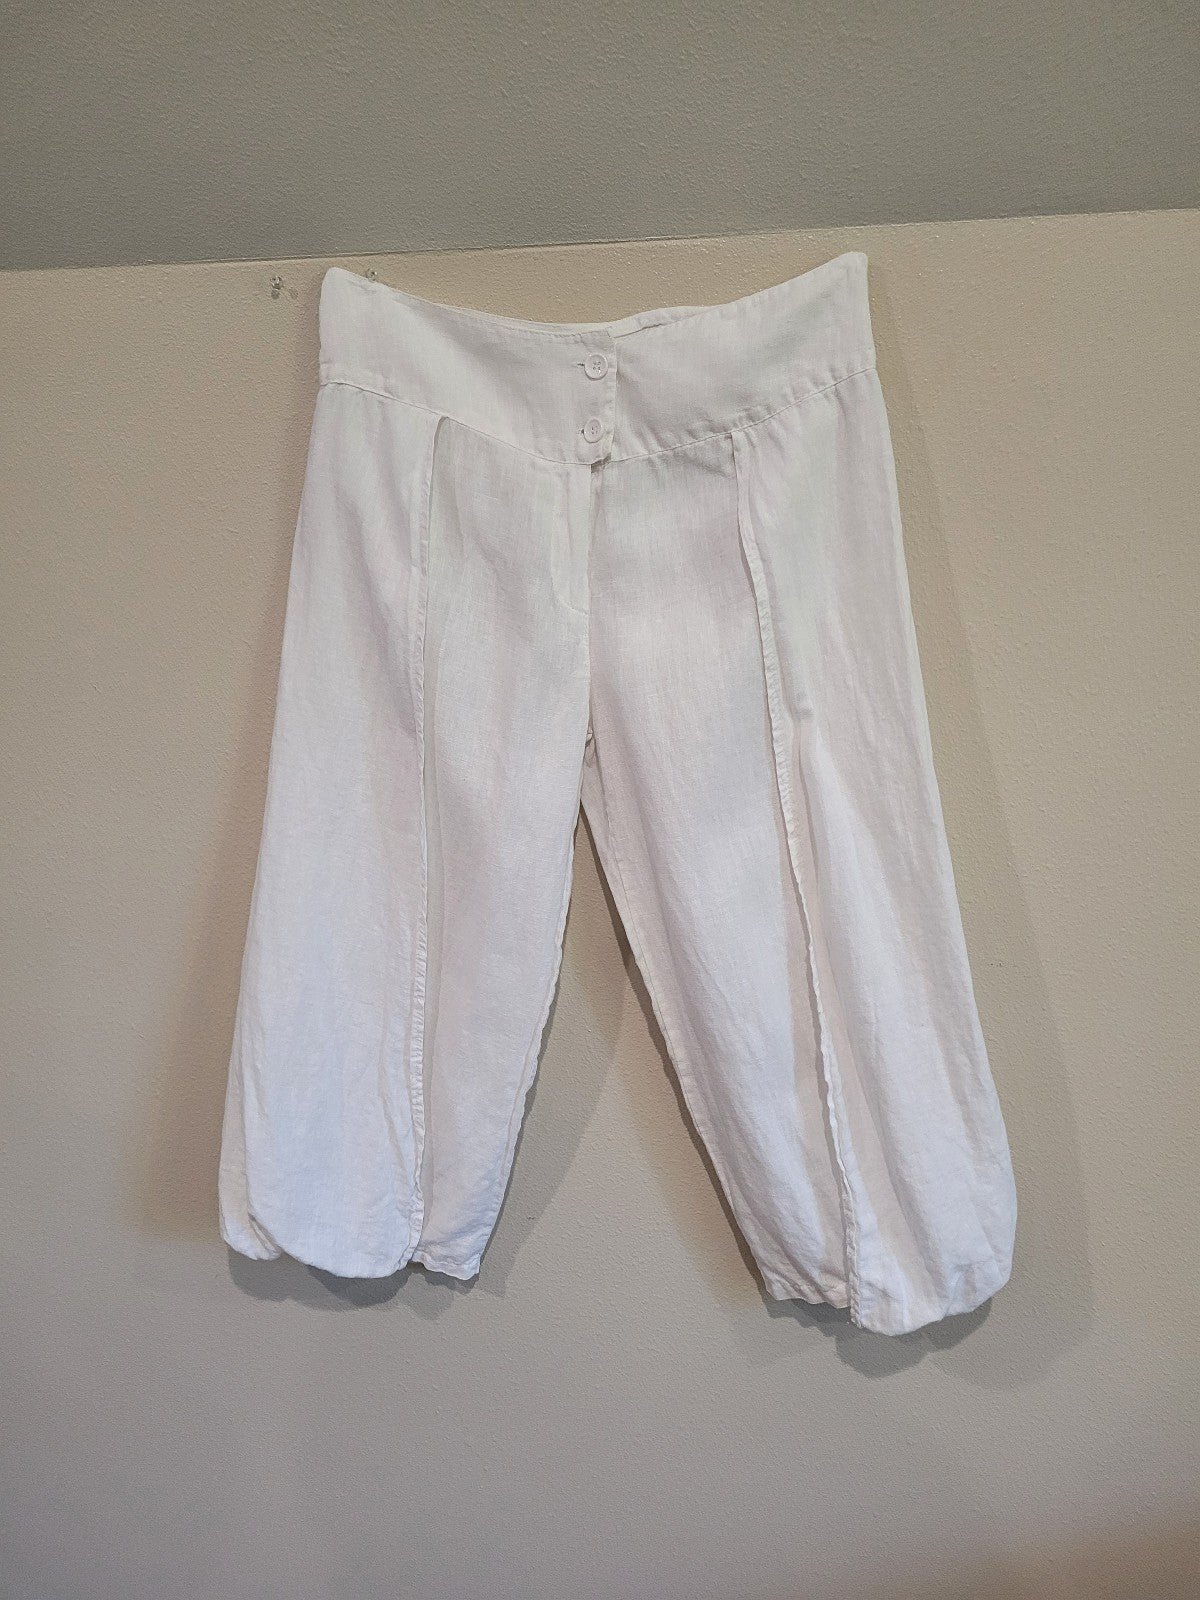 Simple Gemma Ricceri White Linen faux wrap pant. Womens Size Lg. k1OKfYA9t Hot Sale